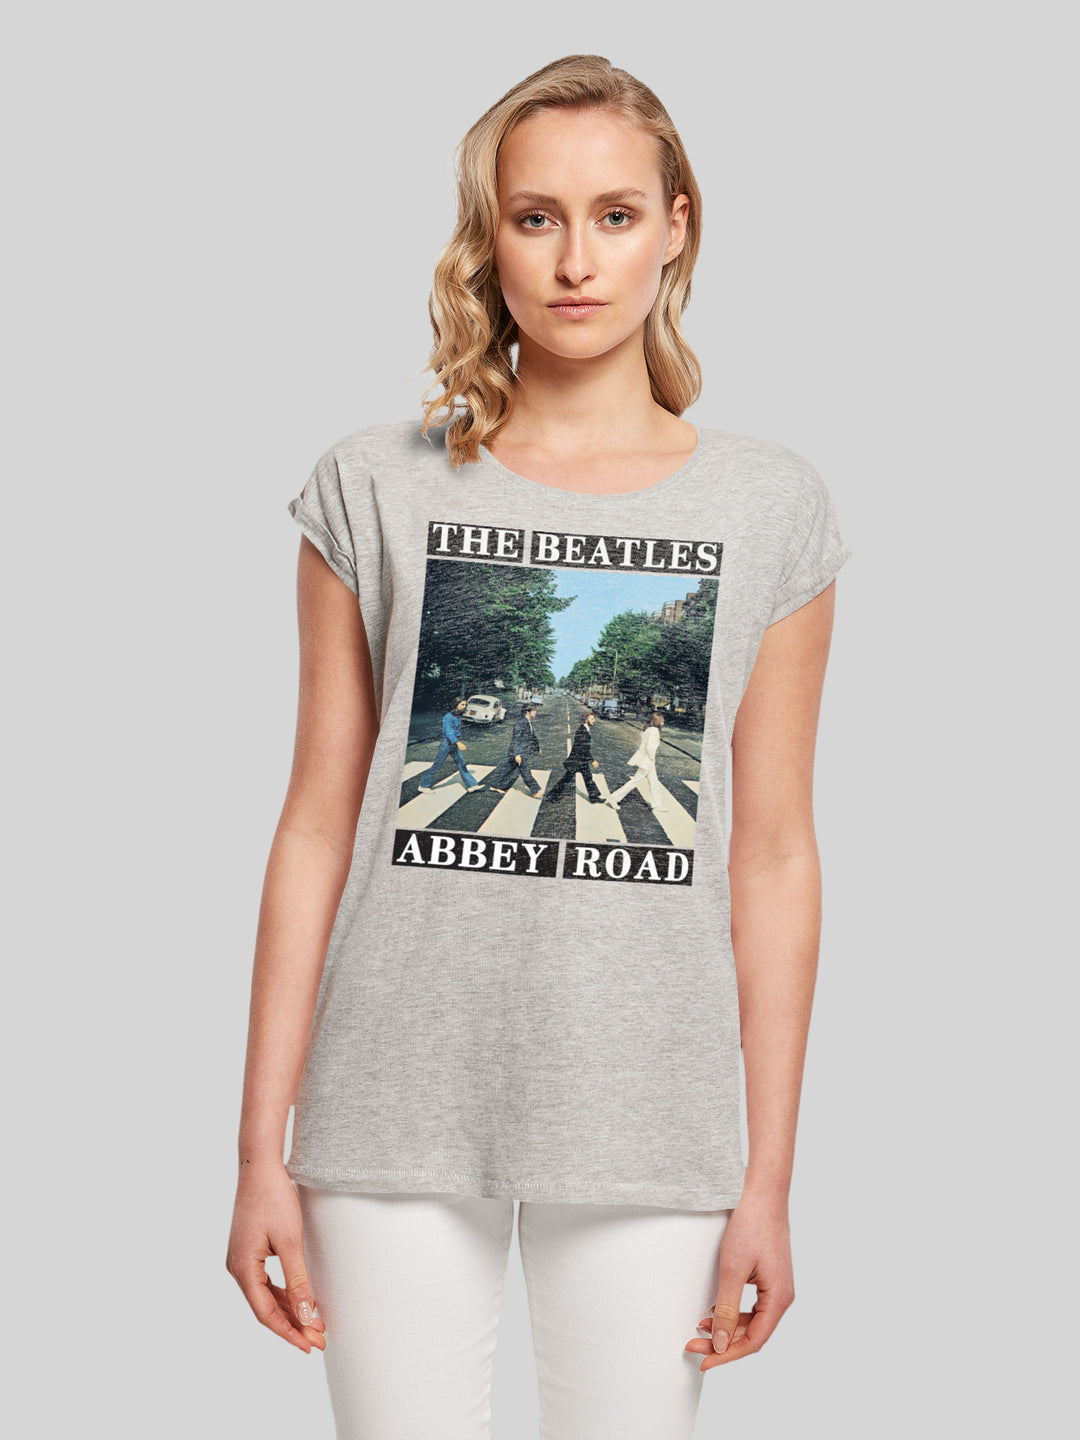 The Beatles T-Shirt | Abbey Road | Premium Short Sleeve Ladies Tee